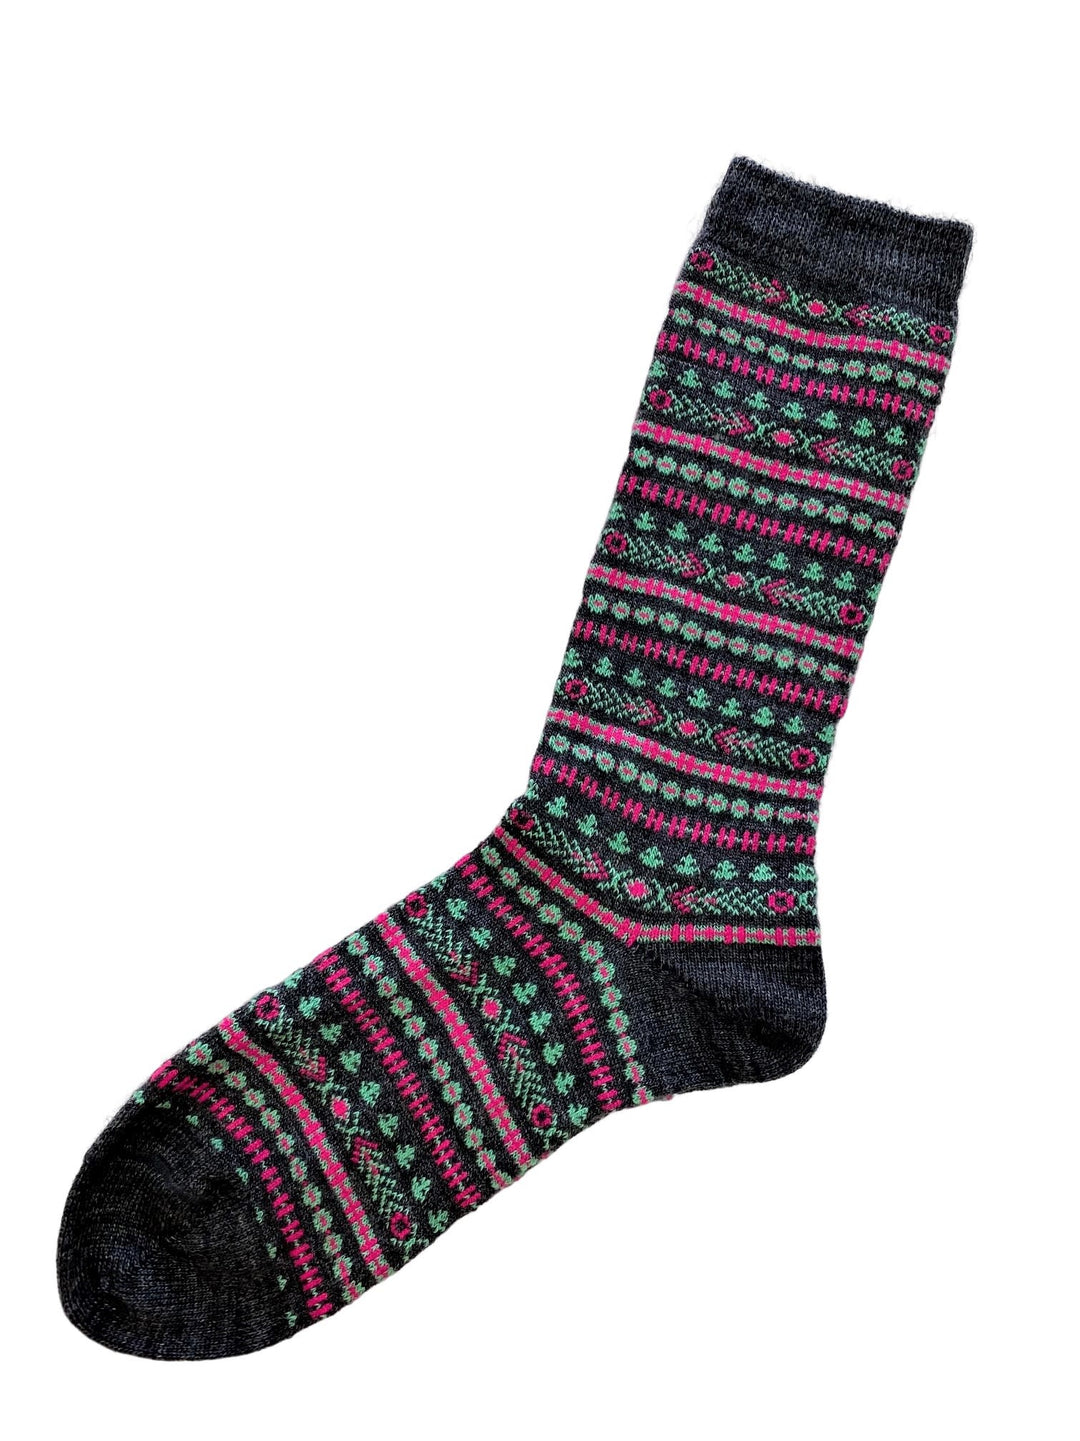 Tey-Art Alpaca Alpine Stripe Socks